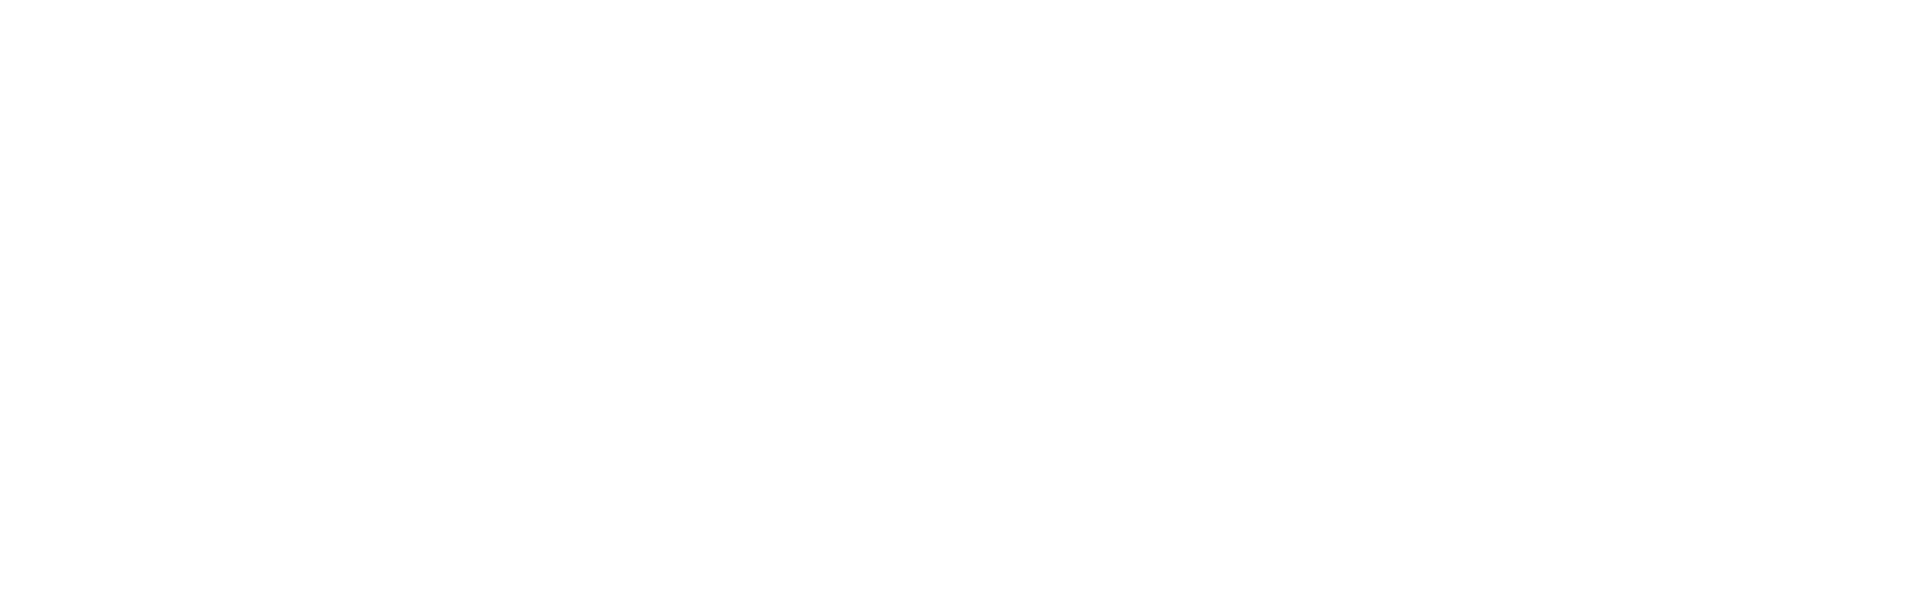 Askew Funeral Home Logo